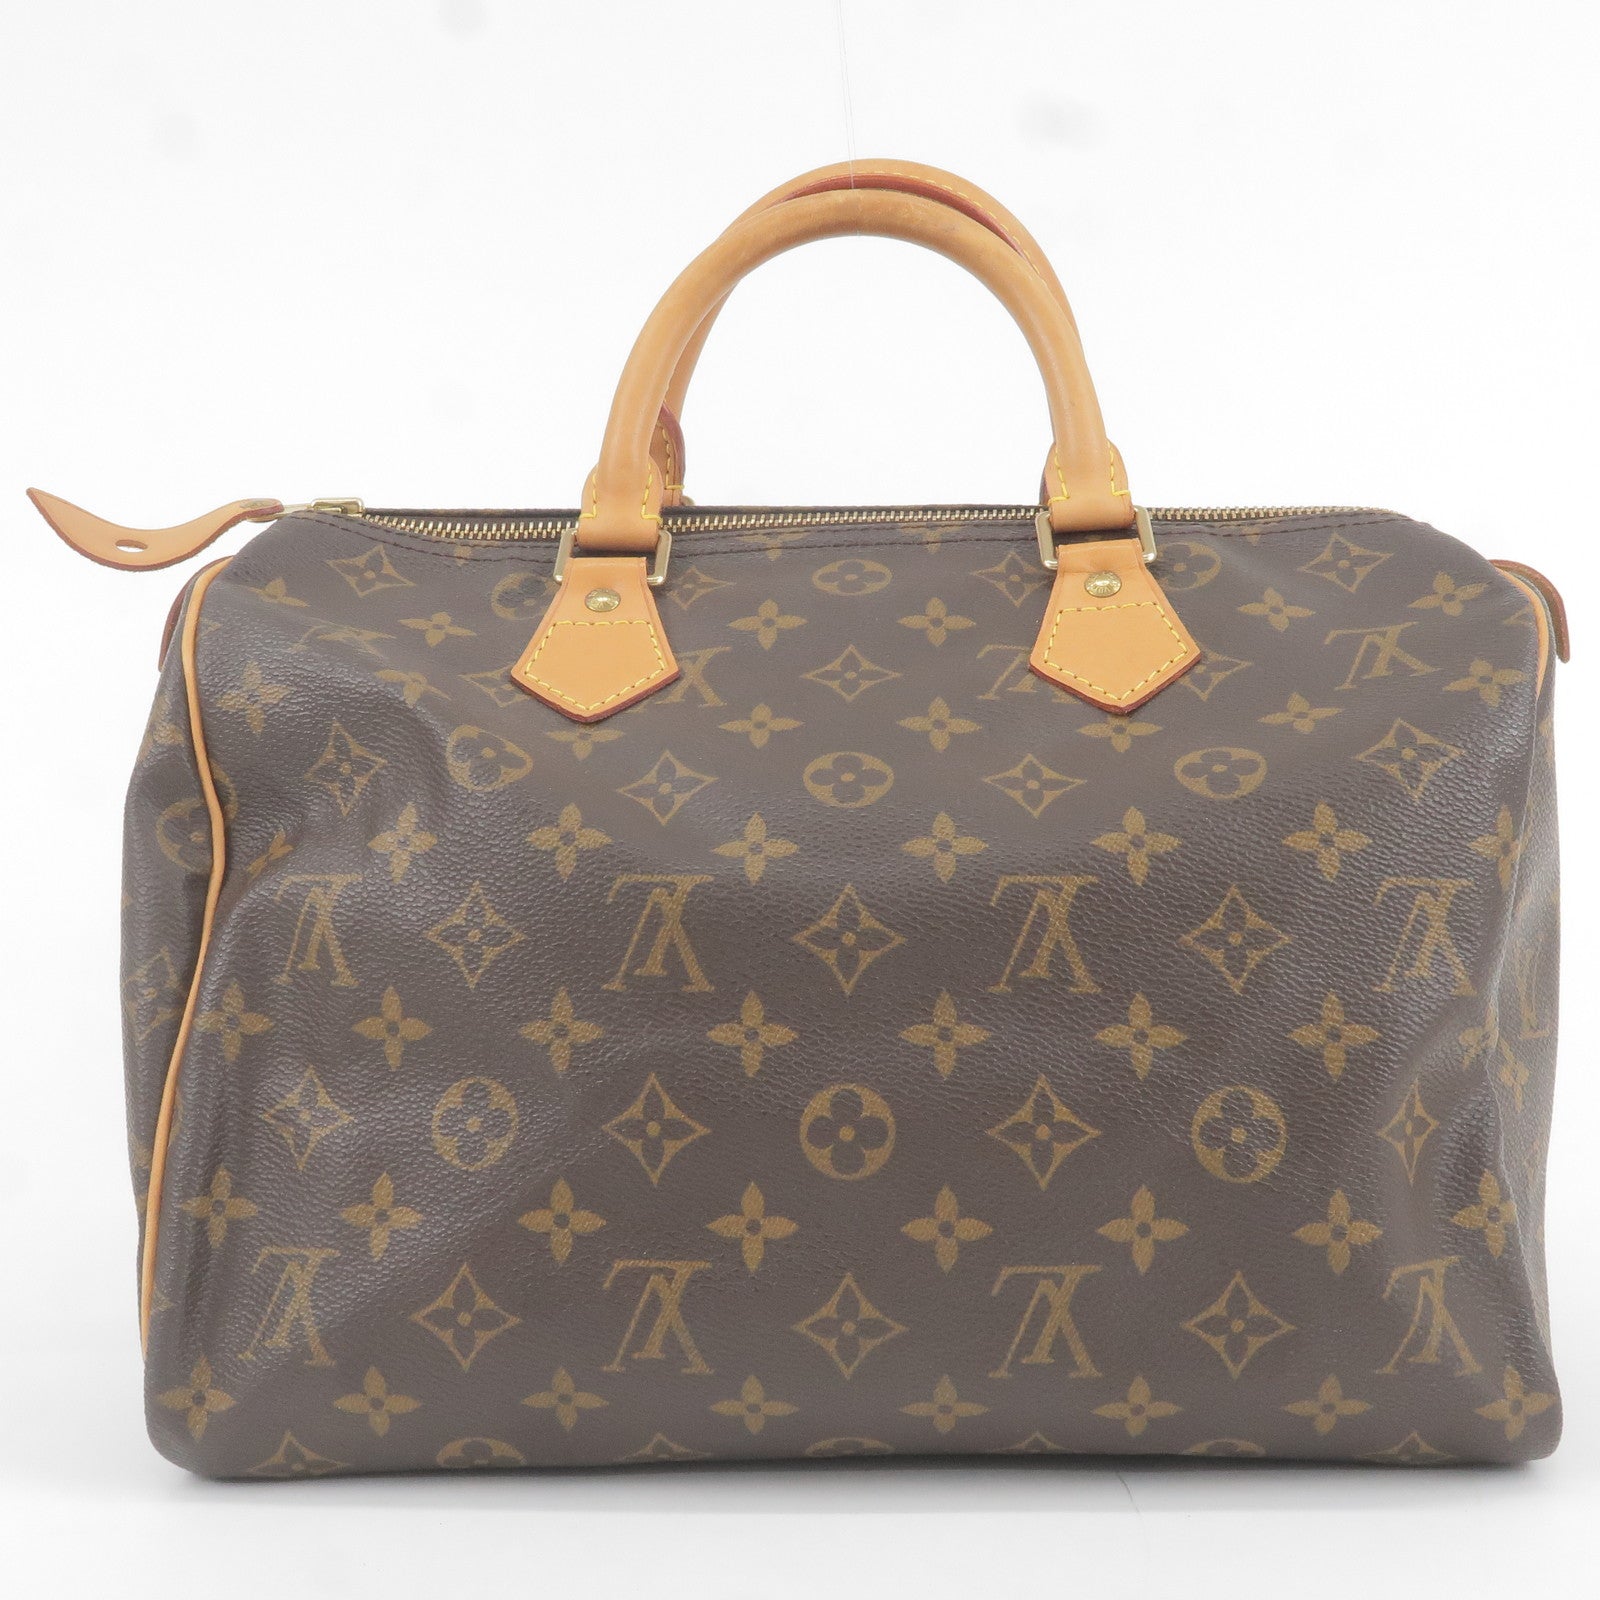 Louis Vuitton Speedy Satchel/Top Handle Bag Black Bags & Handbags